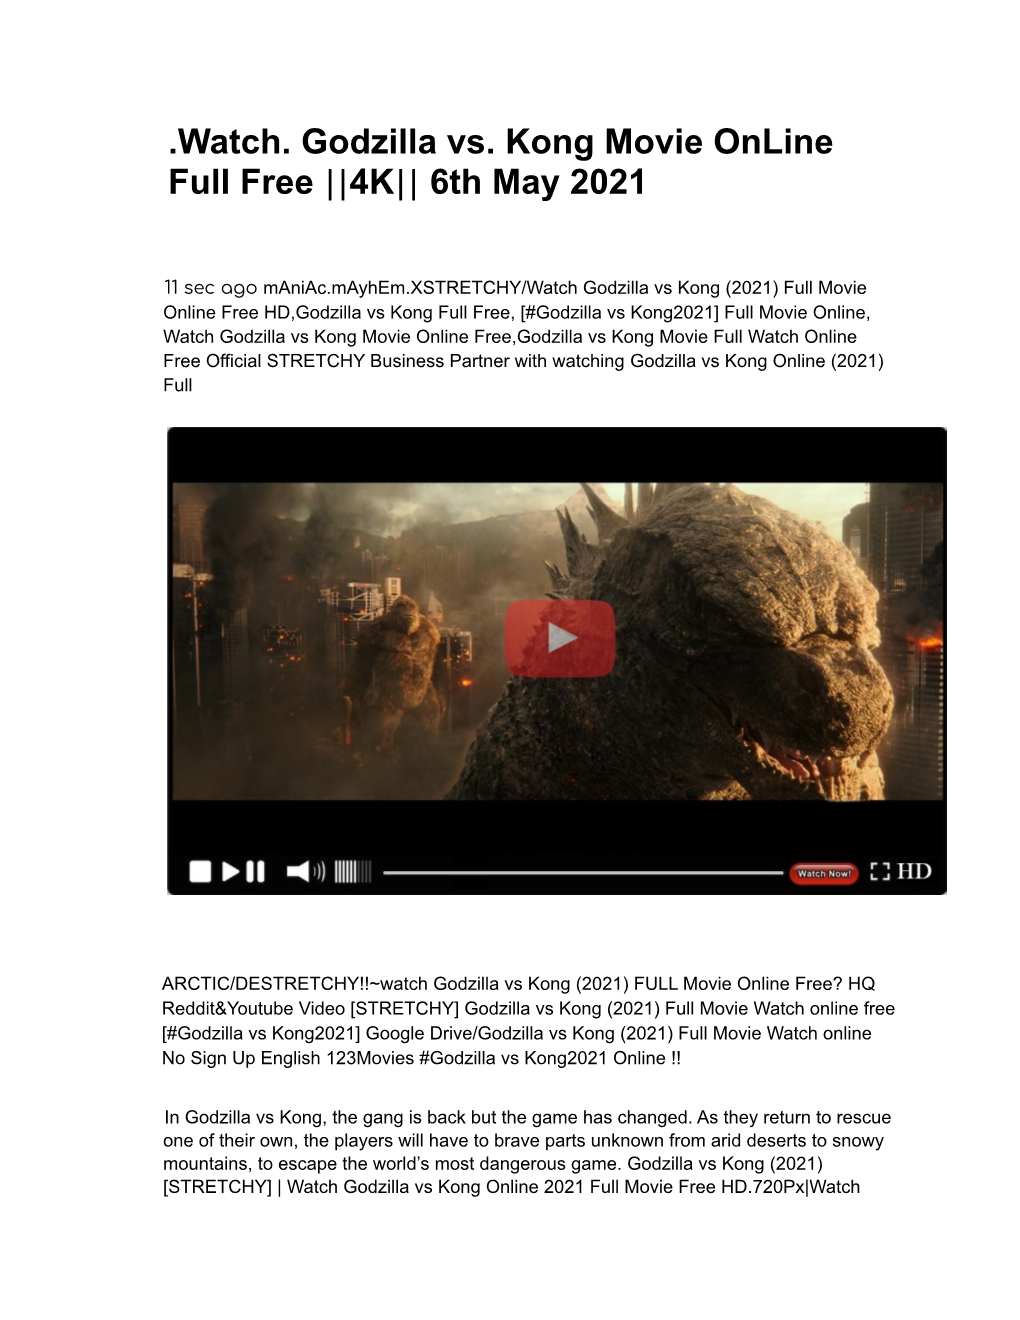 Watch. Godzilla Vs. Kong Movie Online Full Free ||4K|| 6Th May 2021